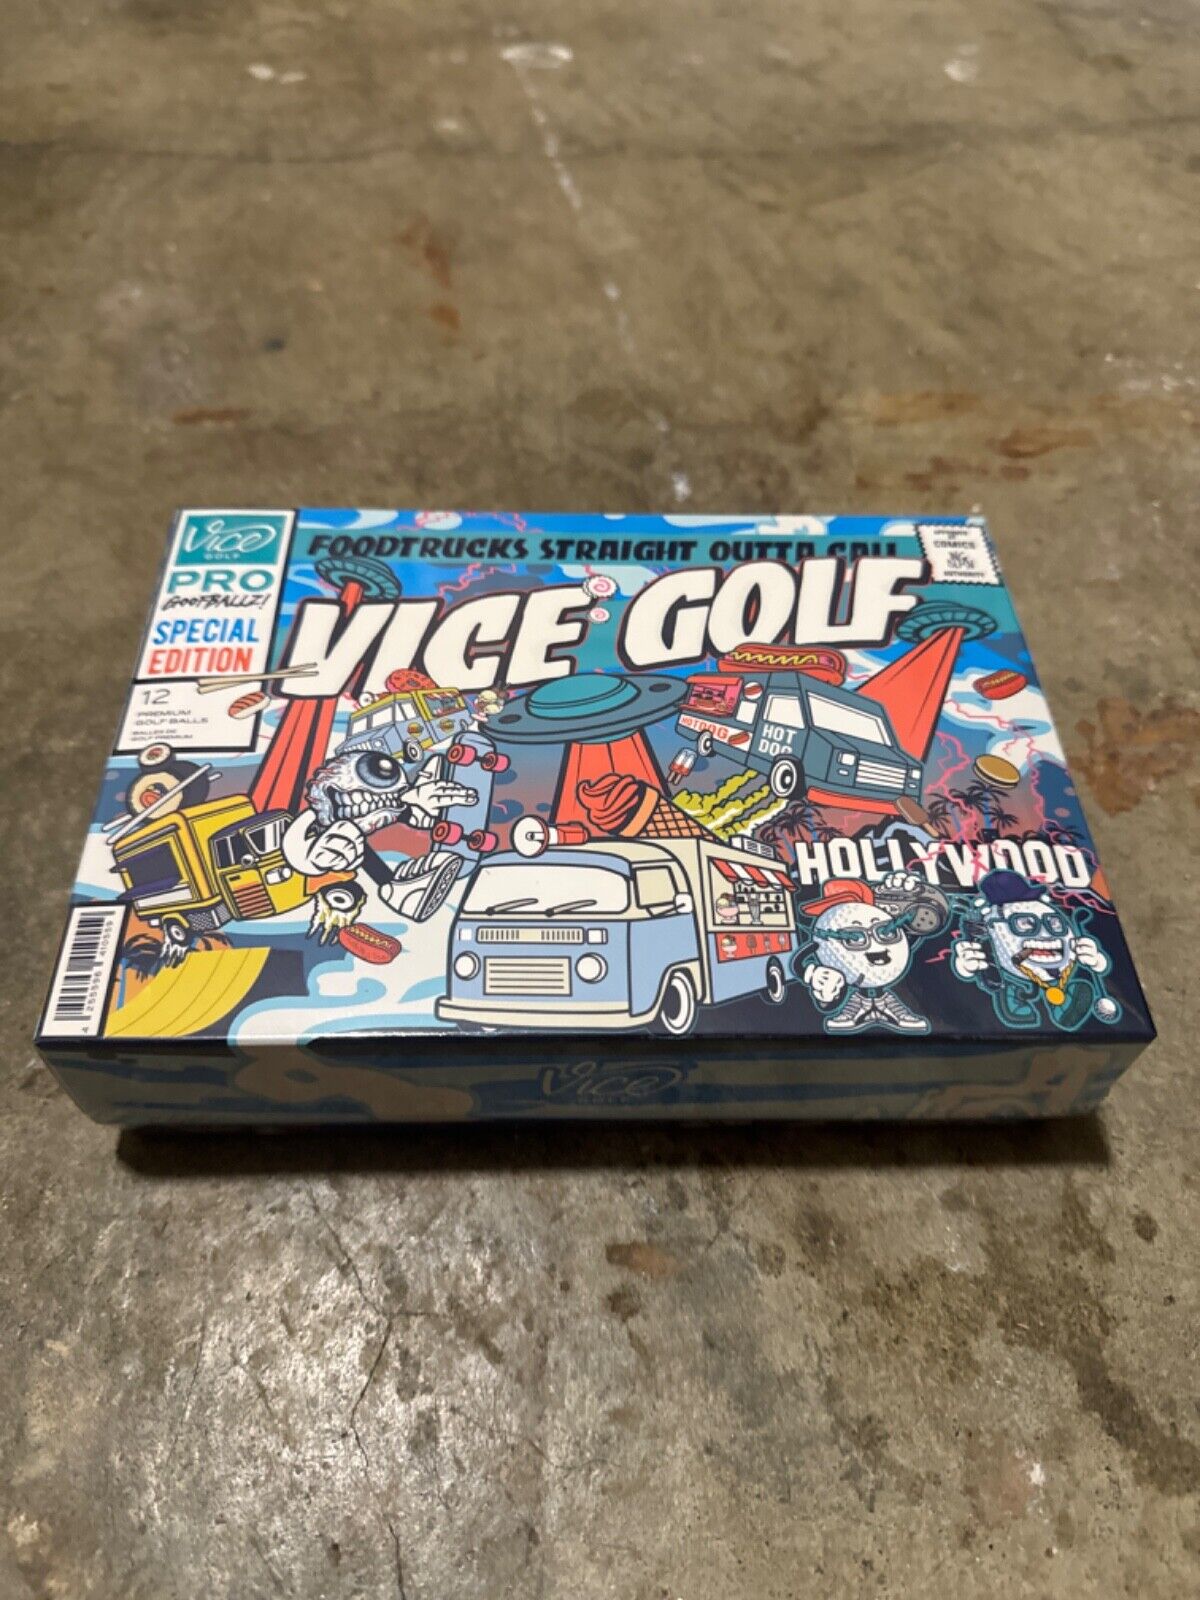 Vice Pro Drip GOOFBALLZ Special Edition New Golf Balls - Dozen Sealed Goofballs